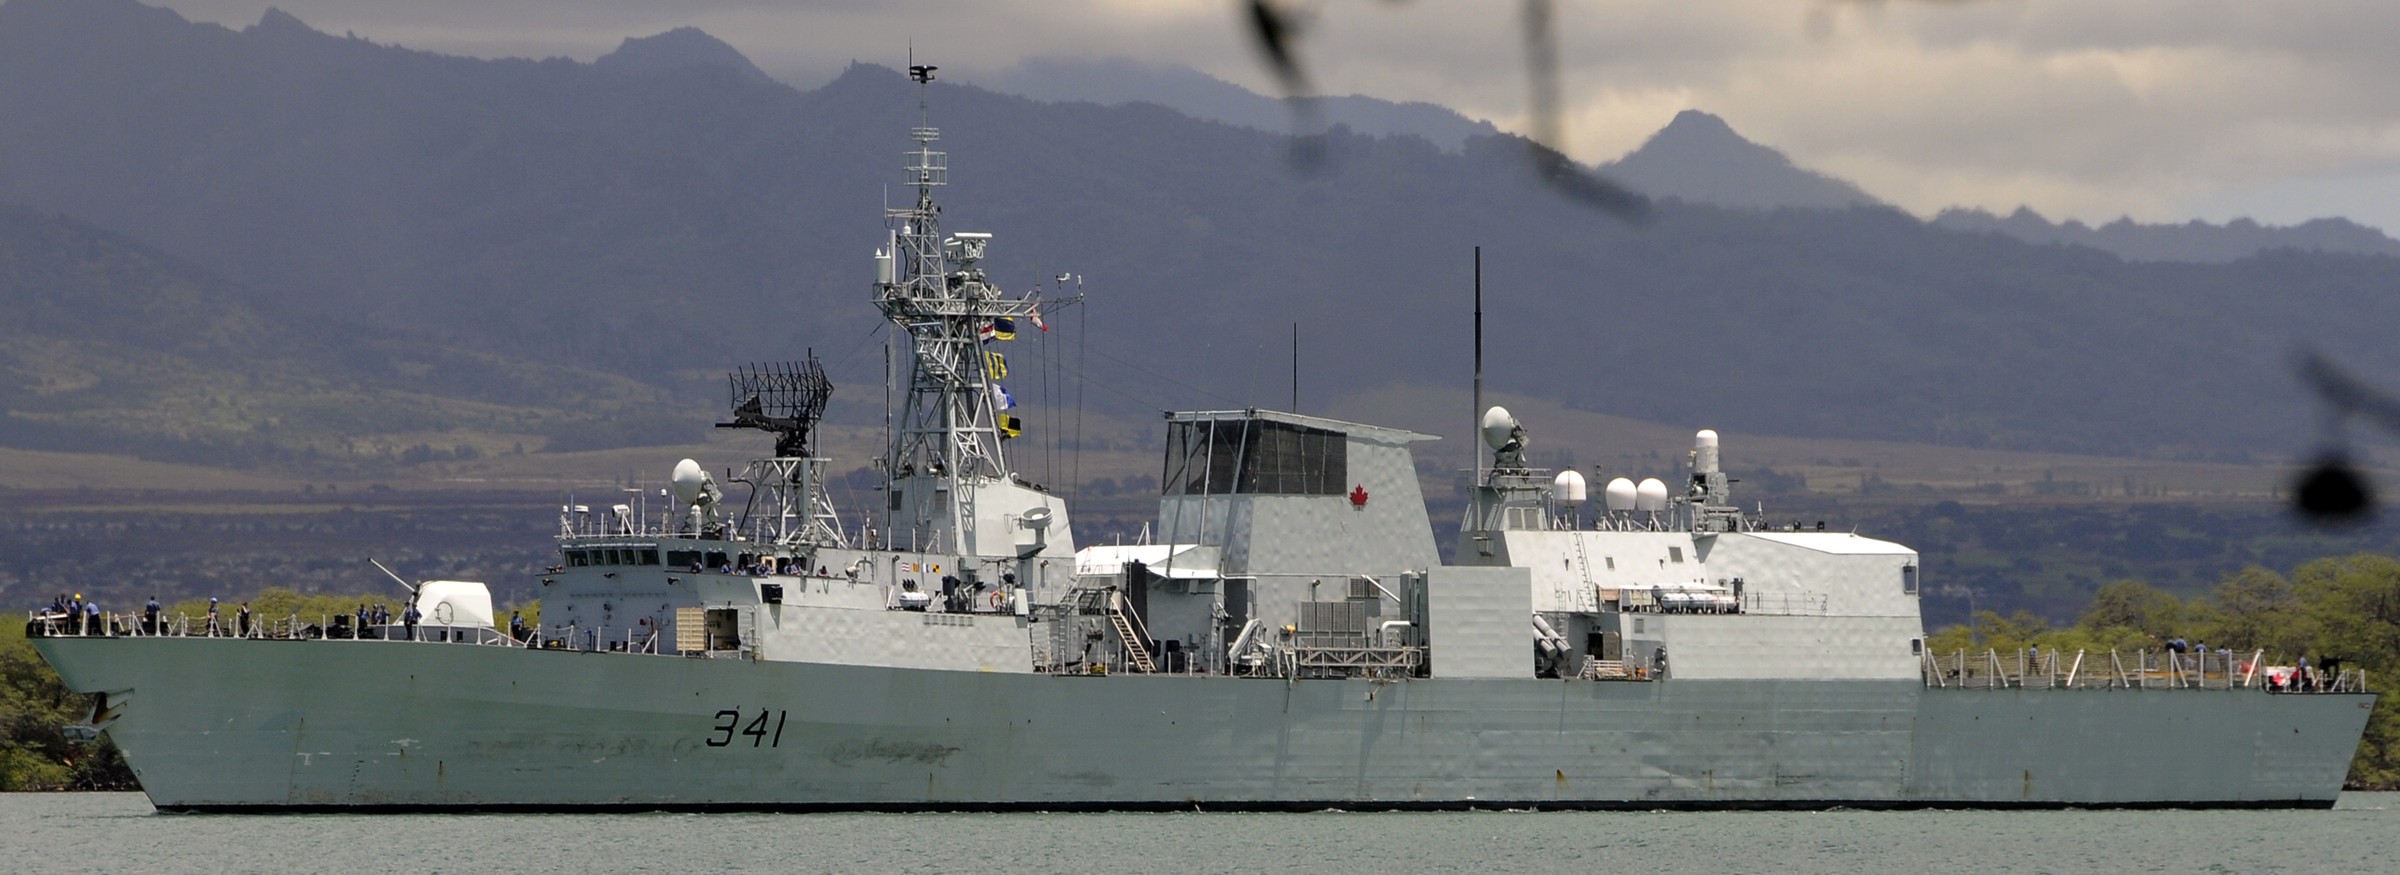 ffh-441 hmcs ottawa halifax class helicopter patrol frigate ncsm royal canadian navy 05